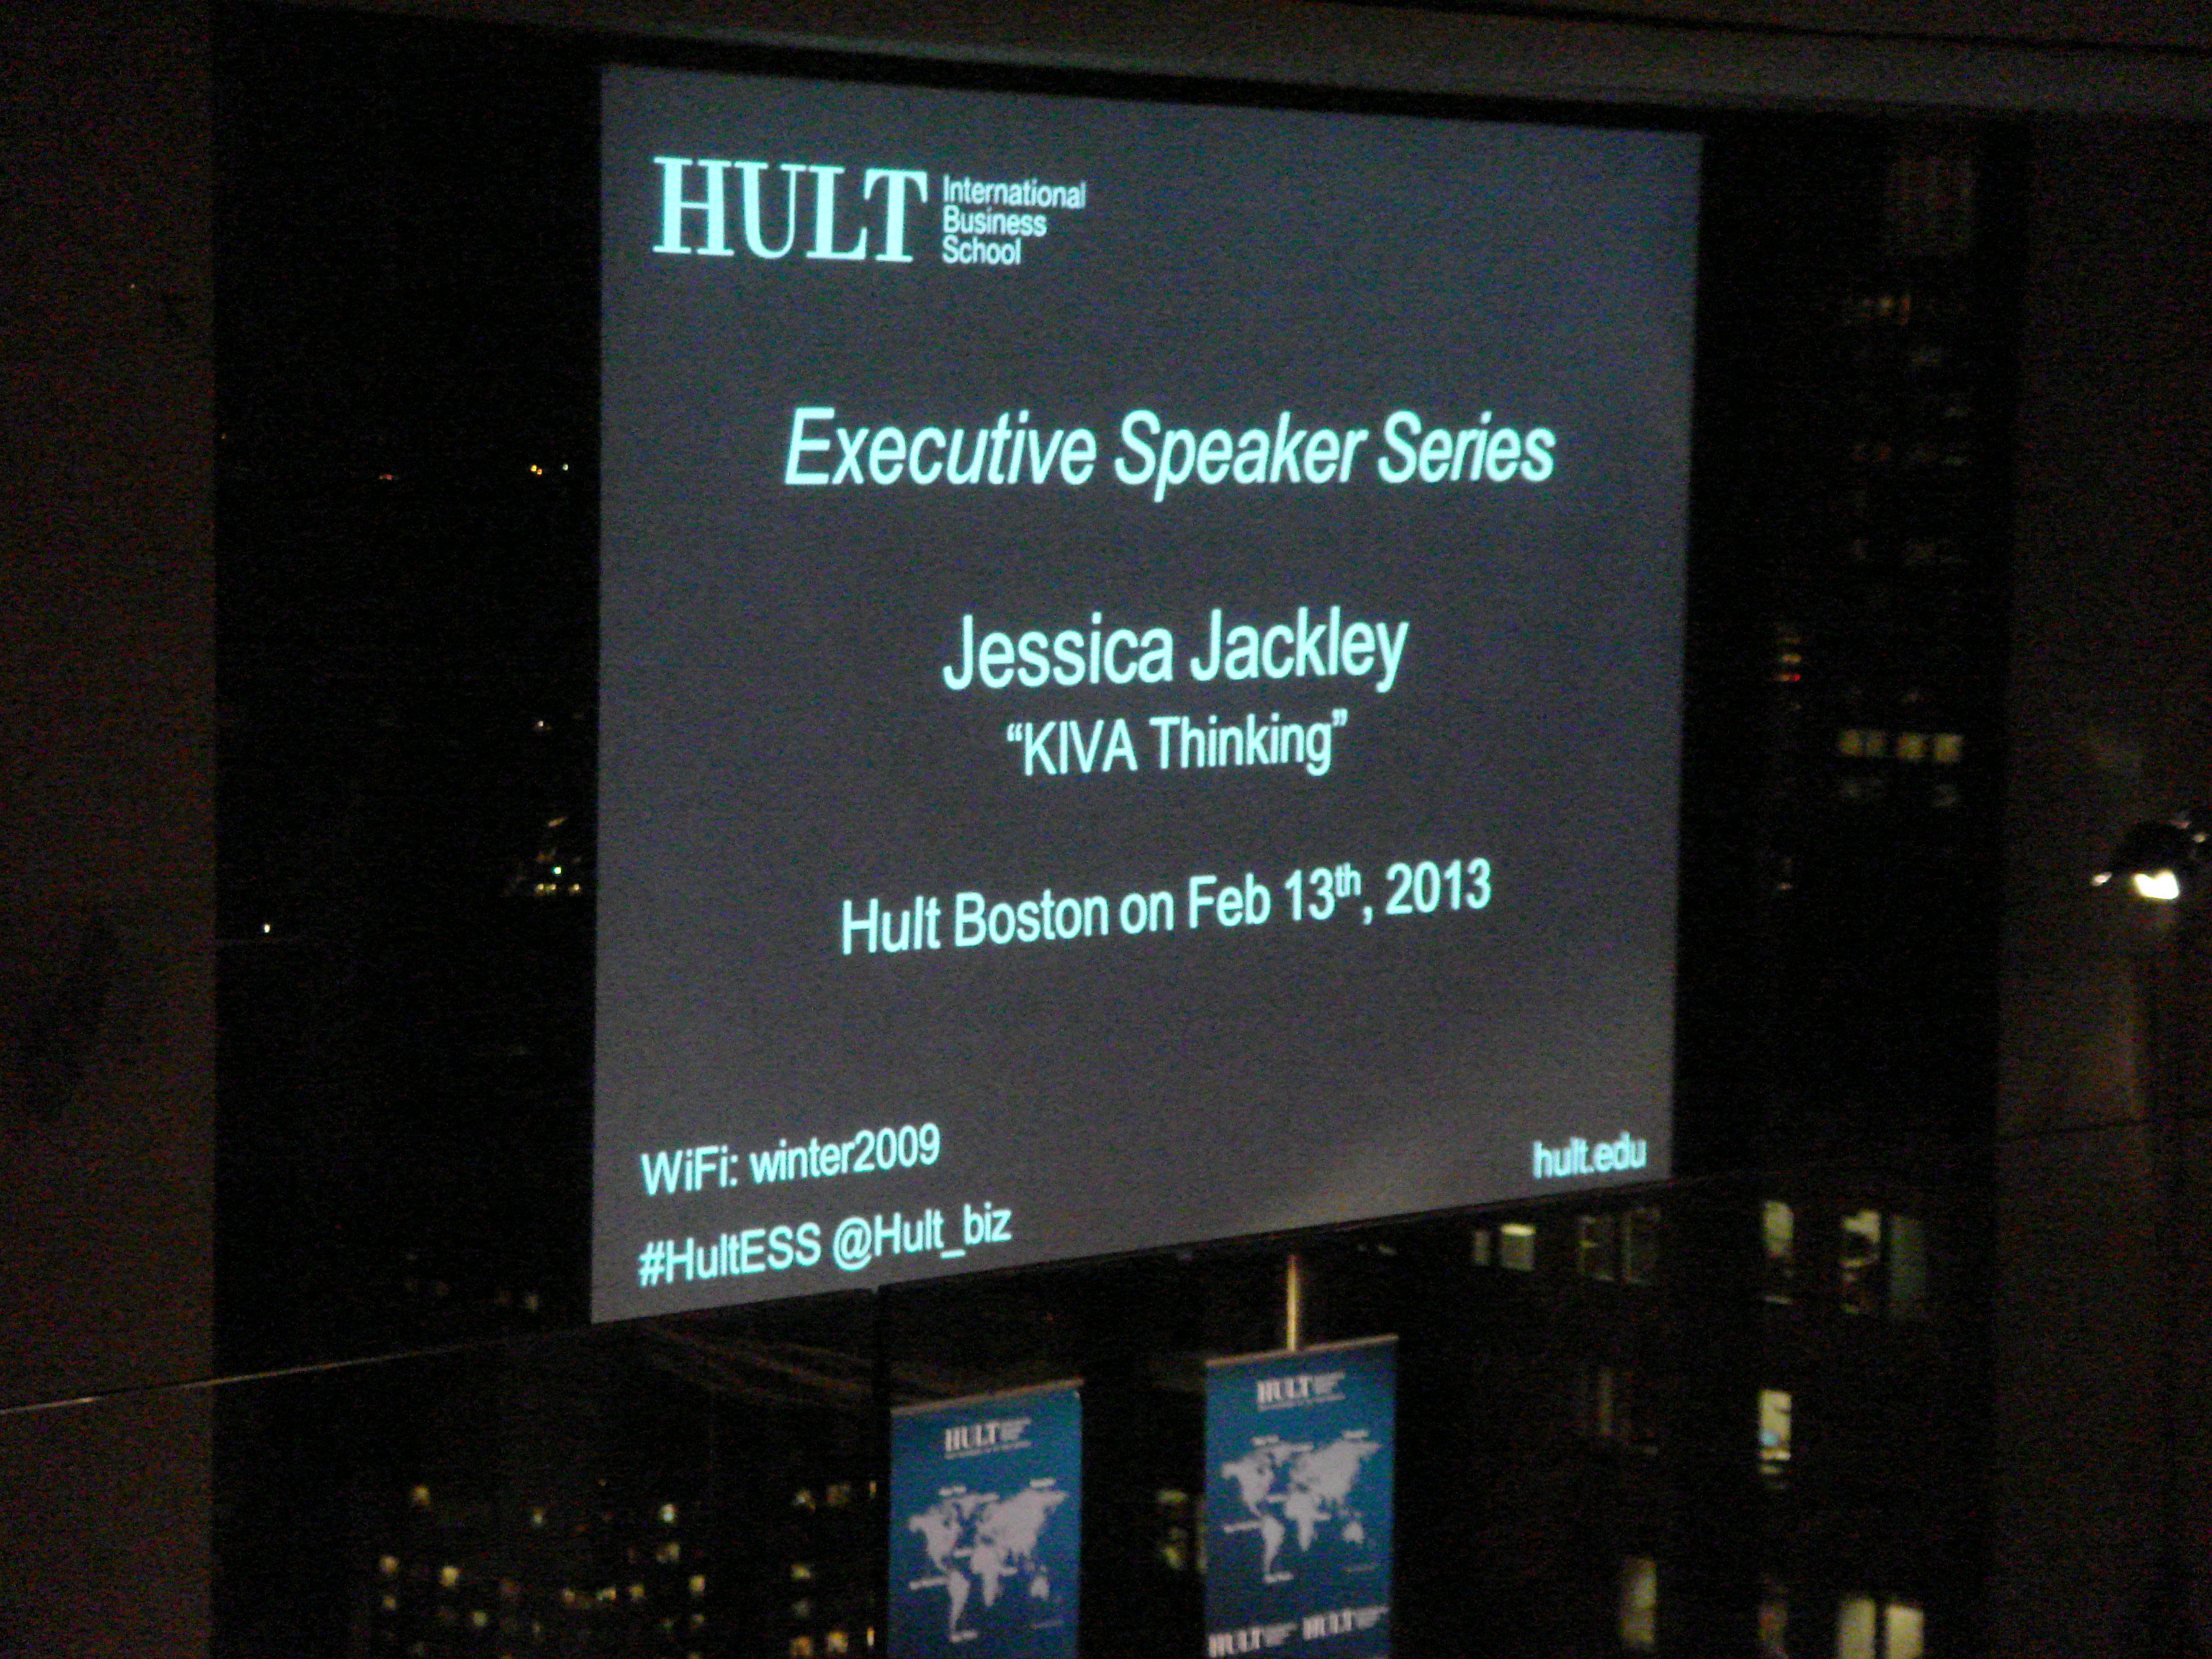 Hult Executive Speaker Series 2013